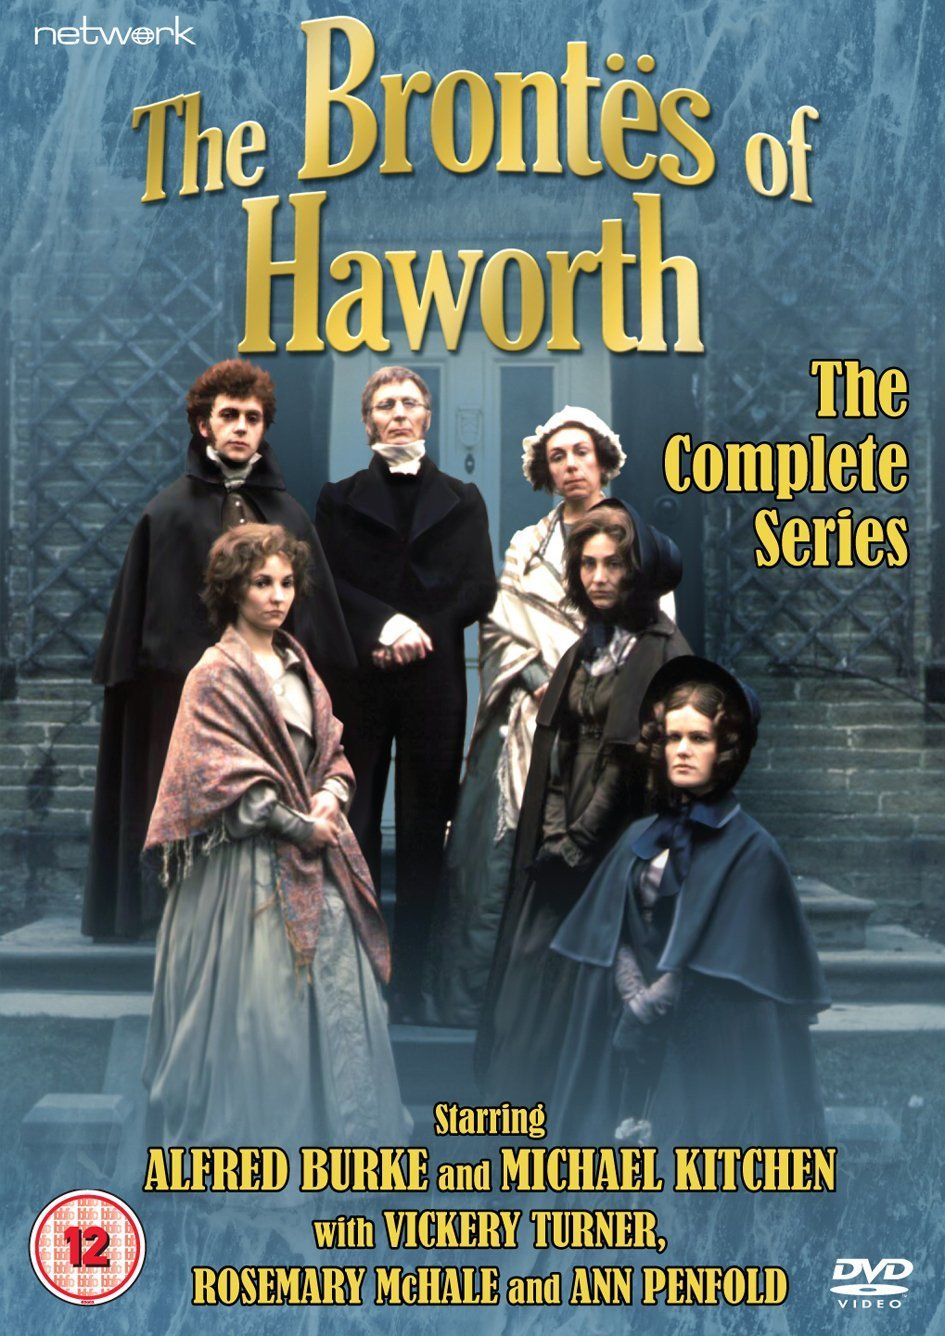 The Brontës of Haworth ne zaman